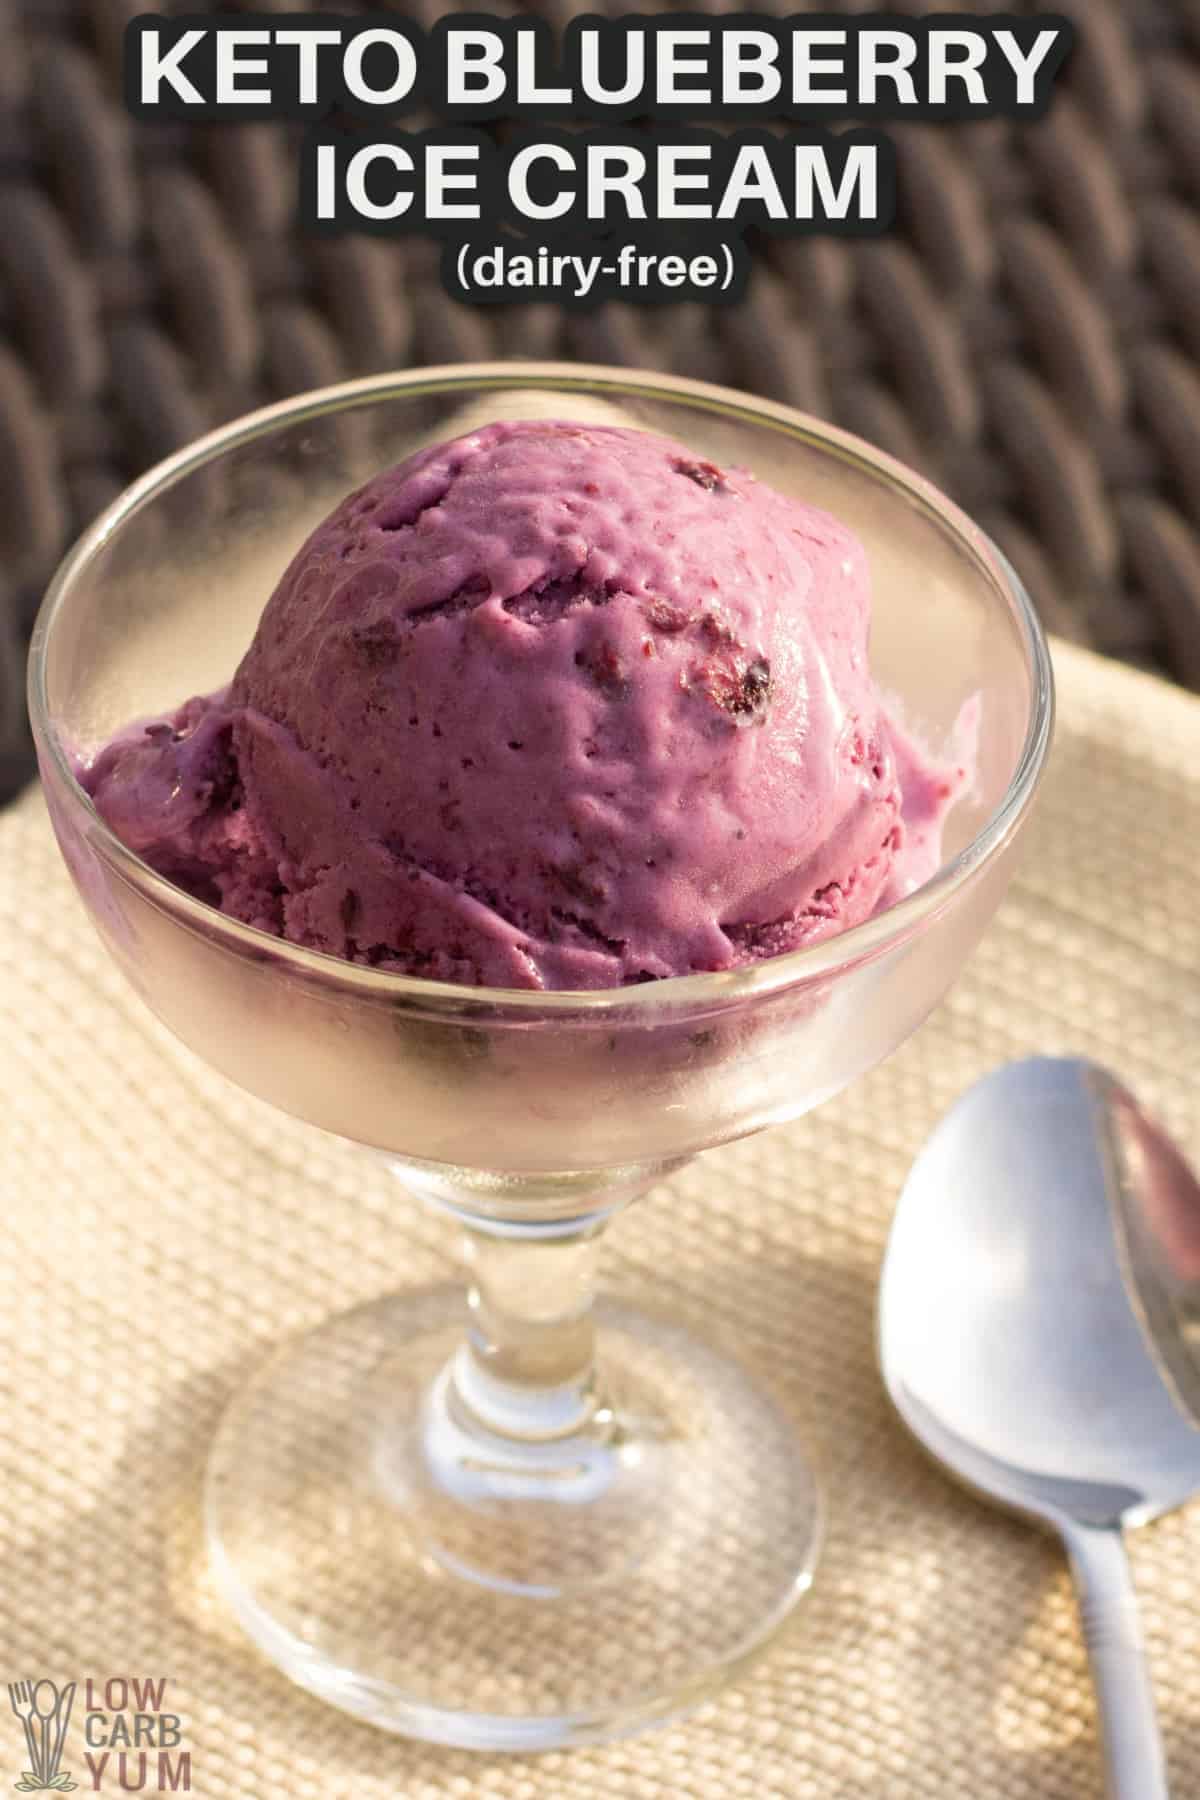 keto blueberry ice cream with text overlay.